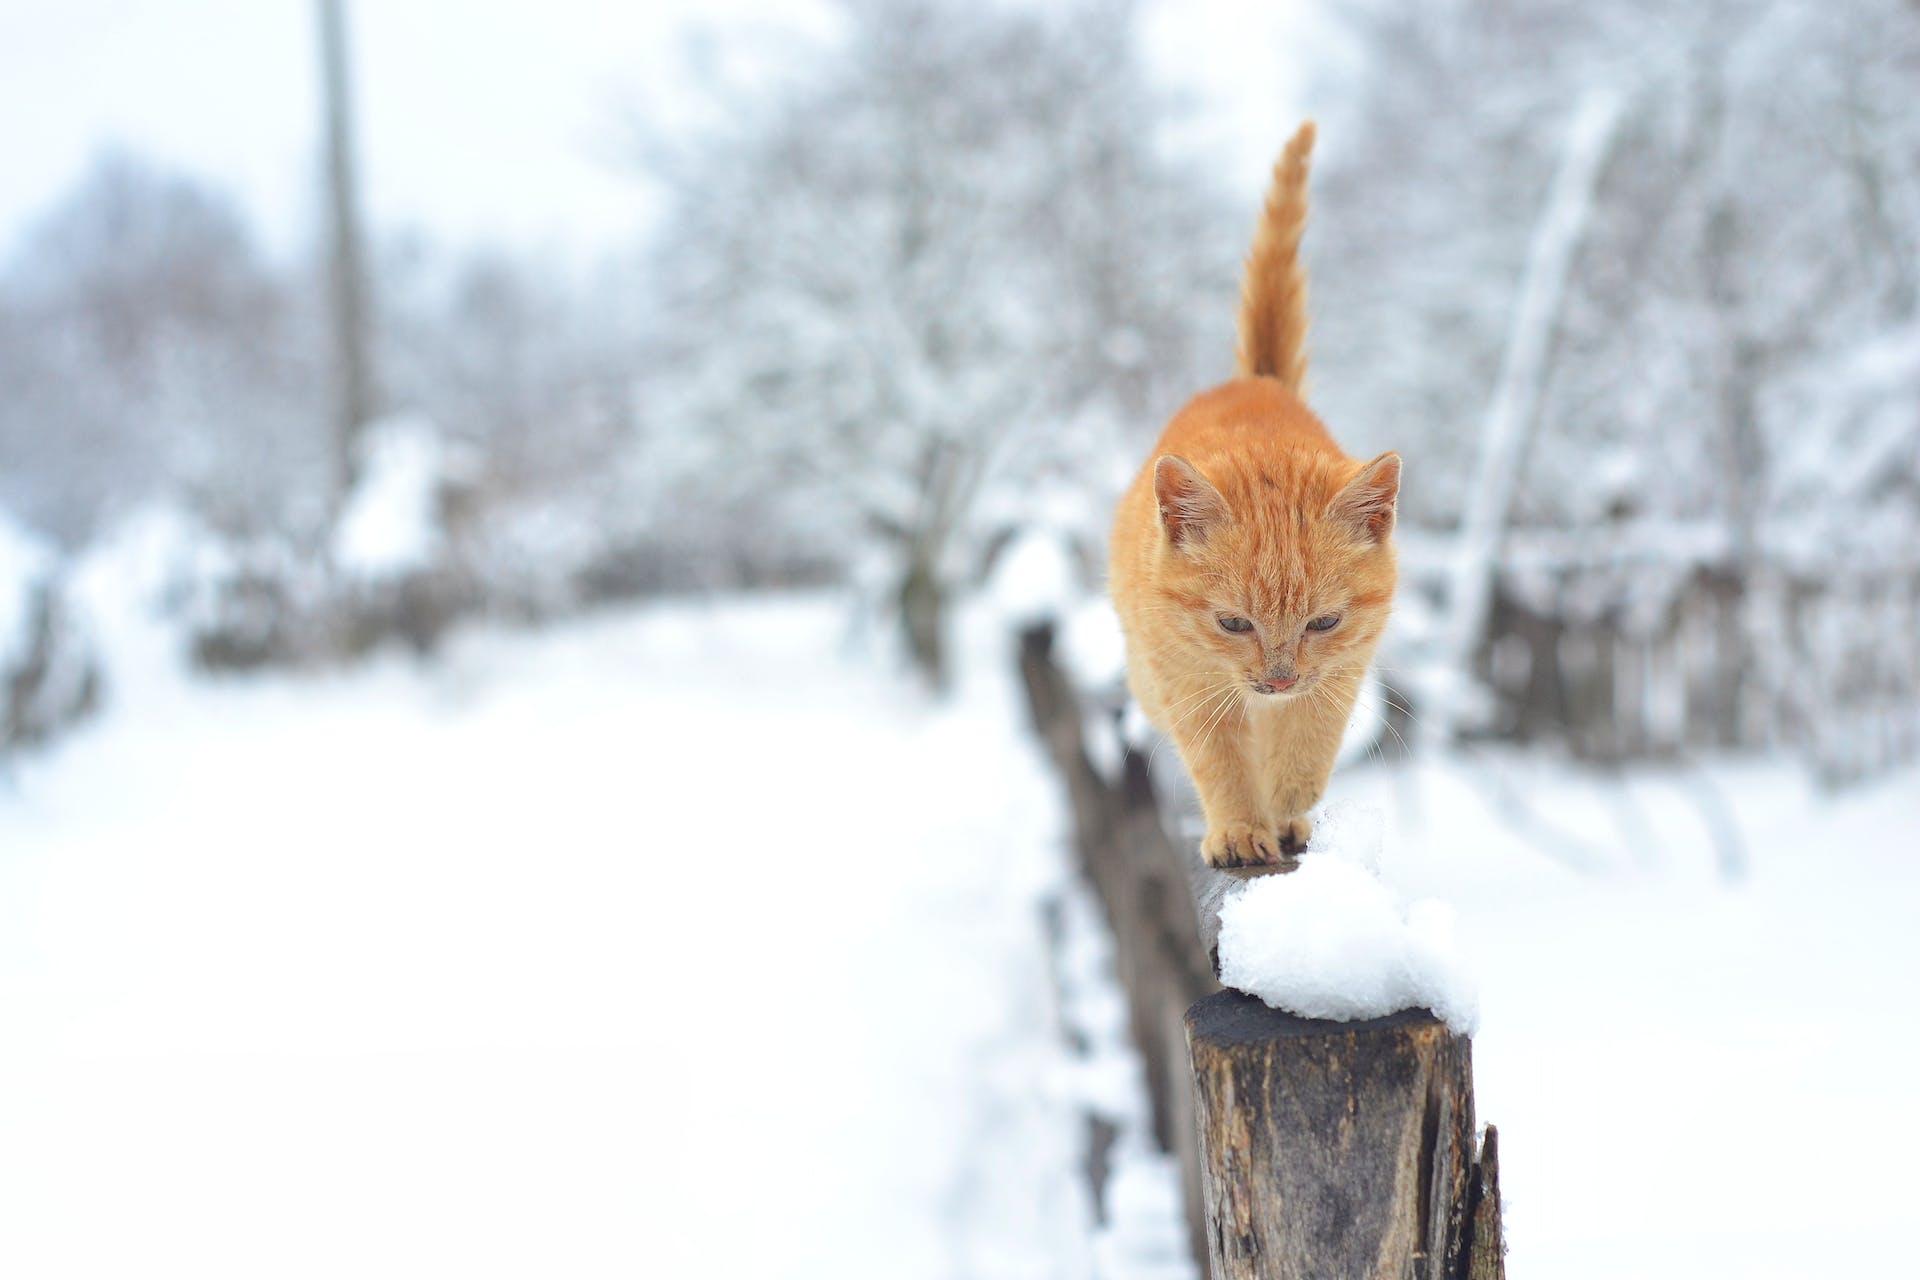 An outdoor cat walking along a snowy fence